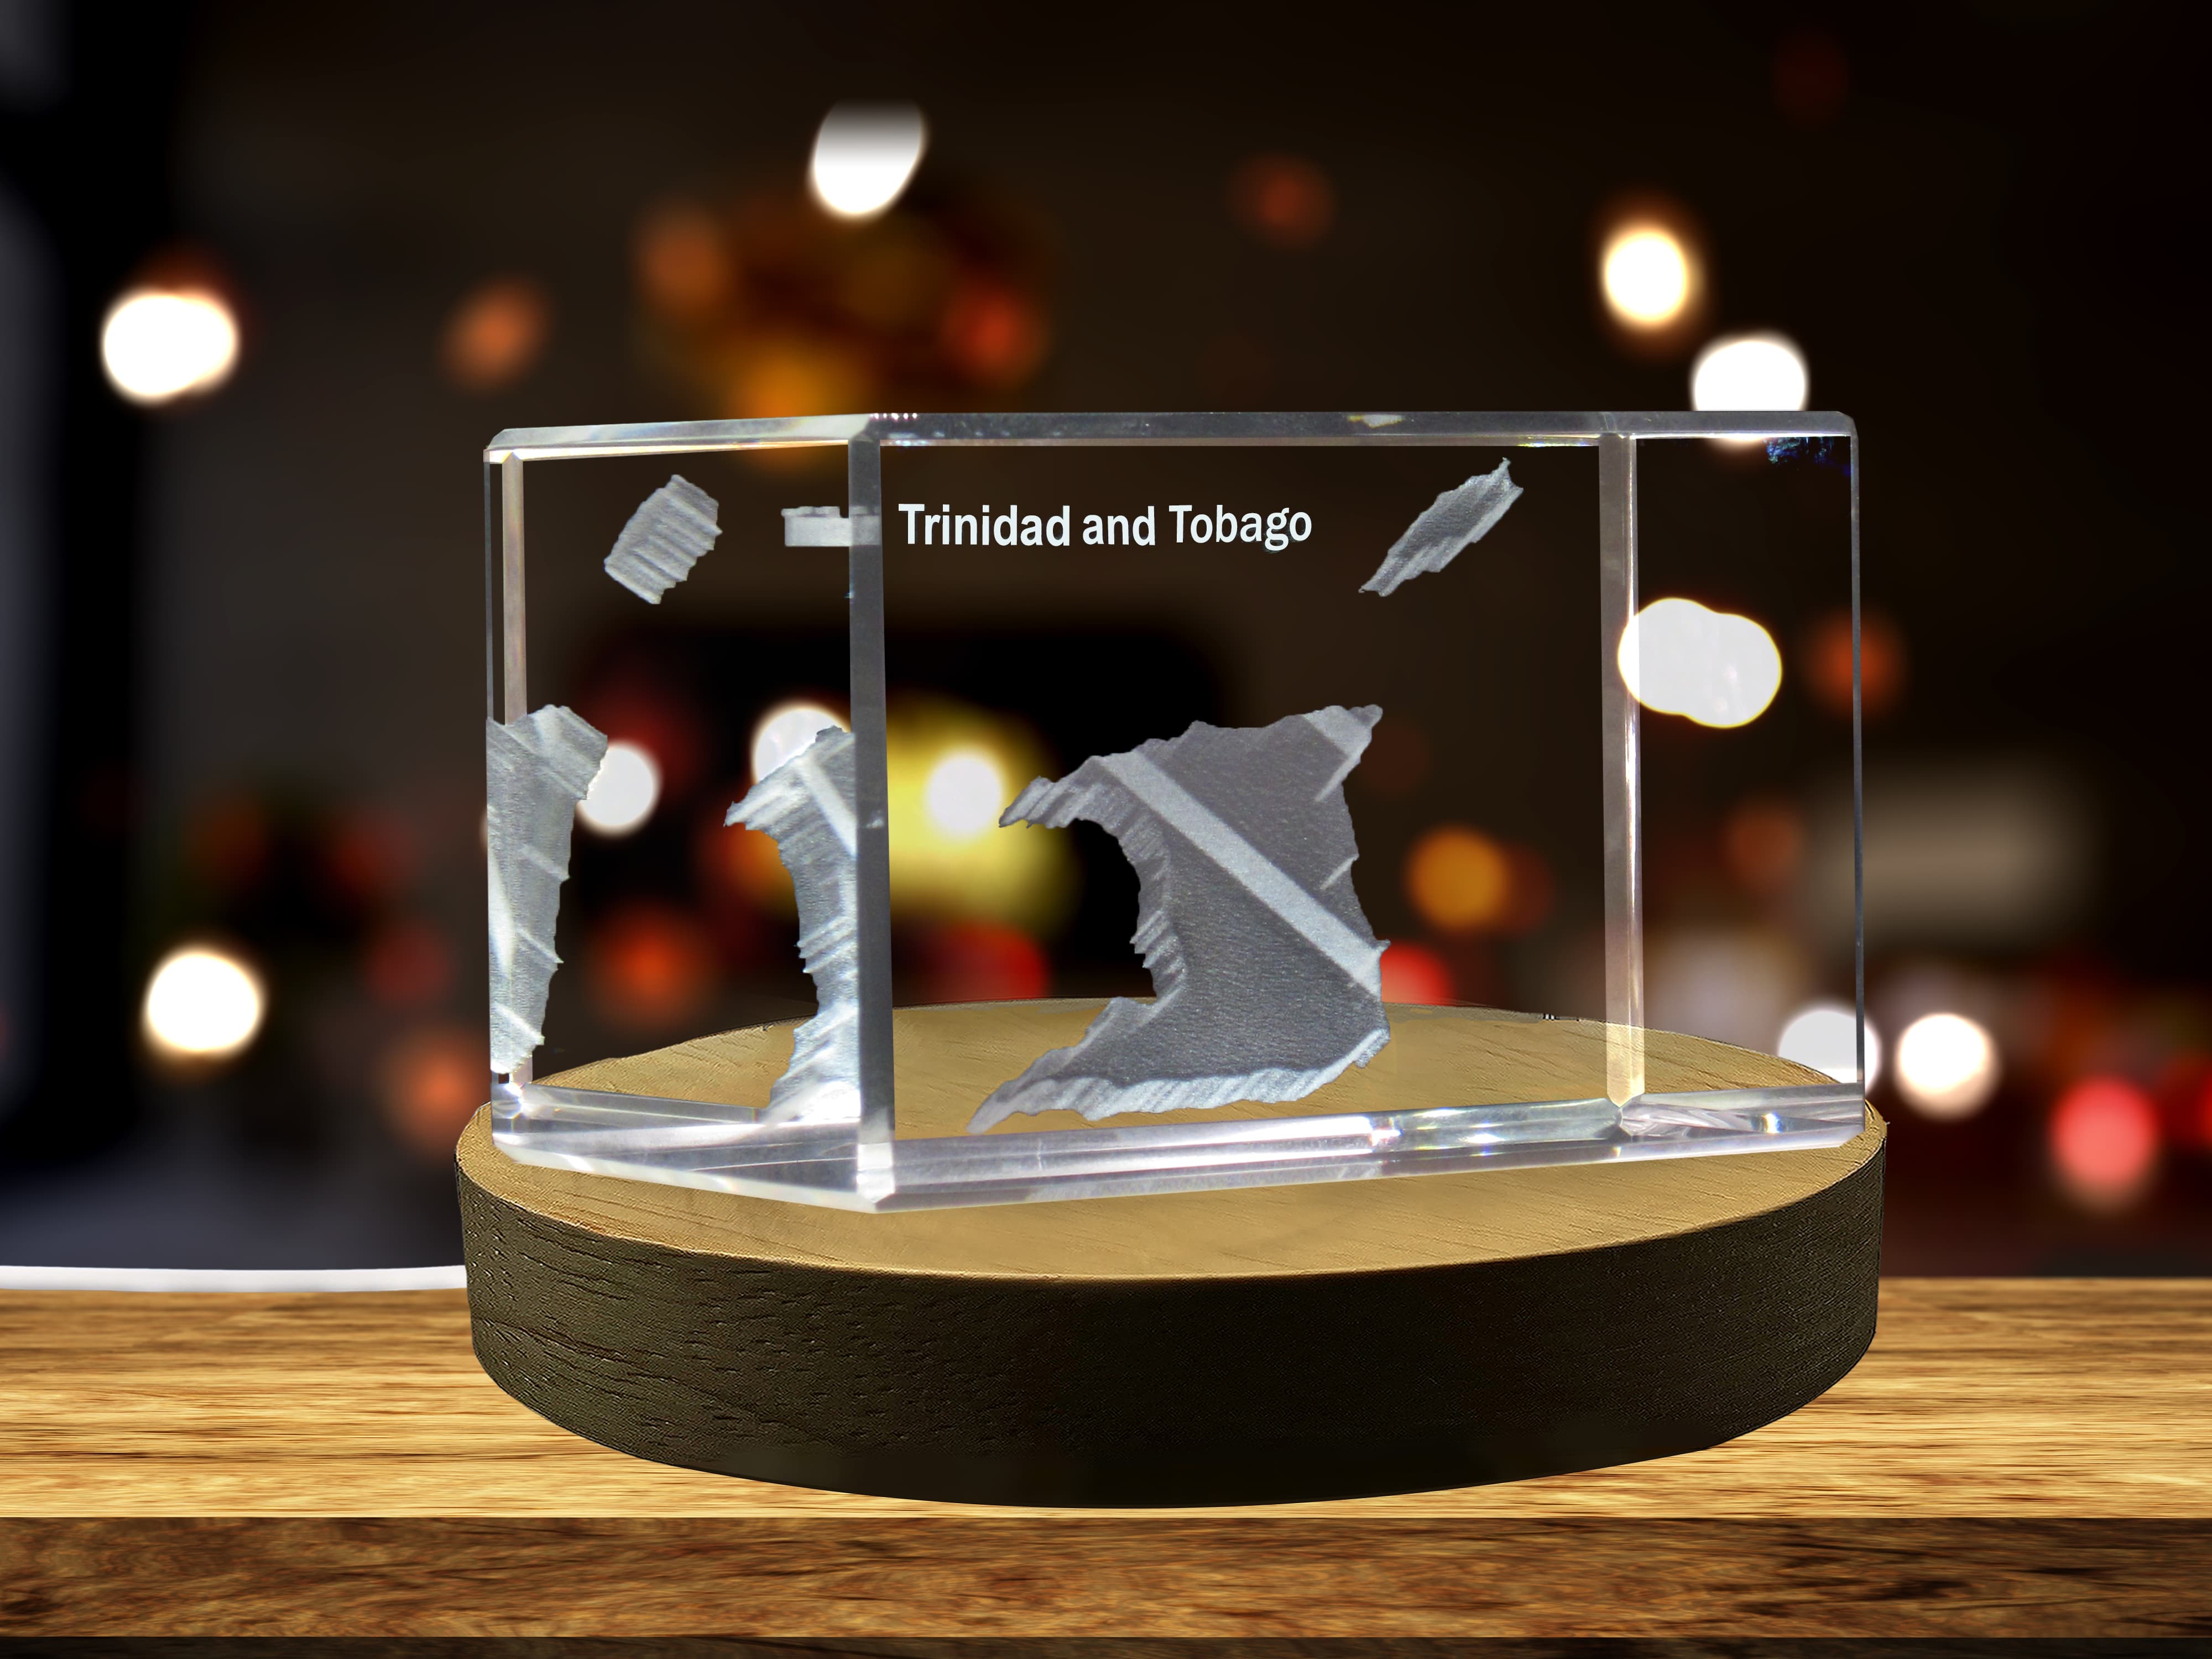 Trinidad and Tobago 3D Engraved Crystal 3D Engraved Crystal Keepsake/Gift/Decor/Collectible/Souvenir A&B Crystal Collection